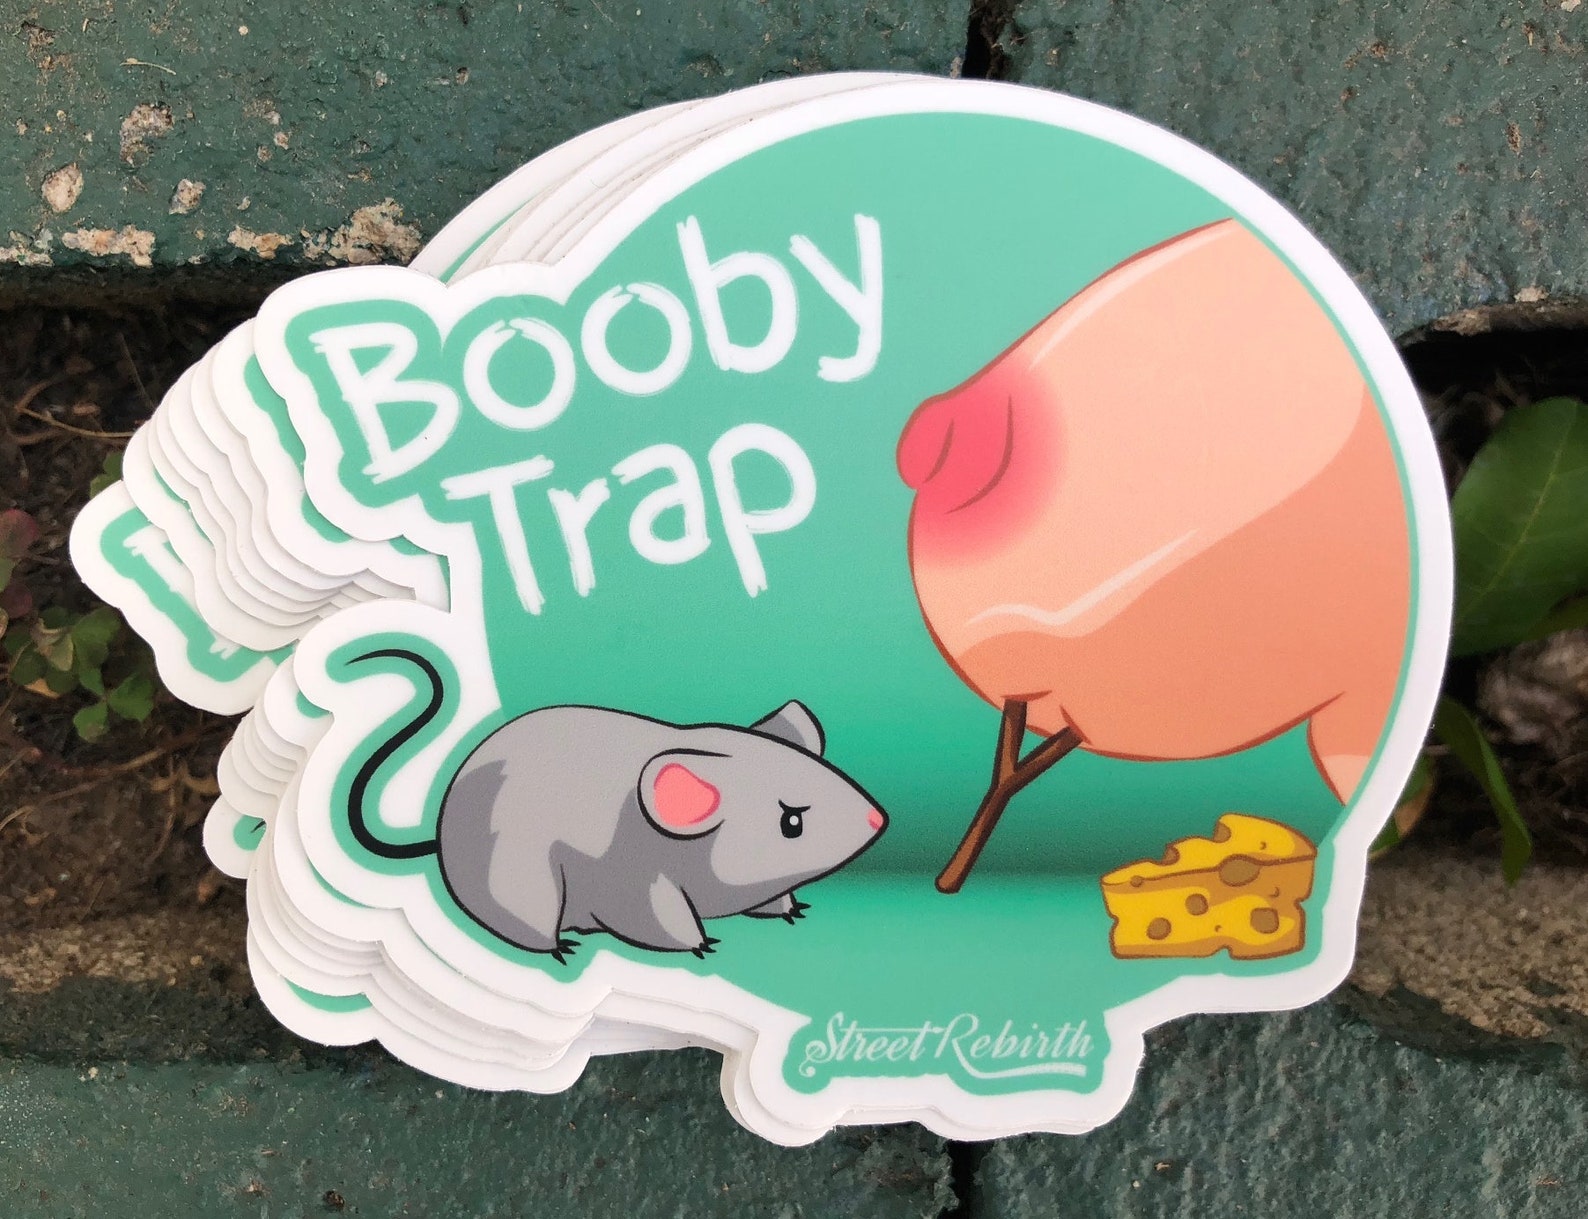 Booby Trap. Bob Saget - Booby Trap. R6 Booby Trap. Трэп Стикеры. Boobie trap